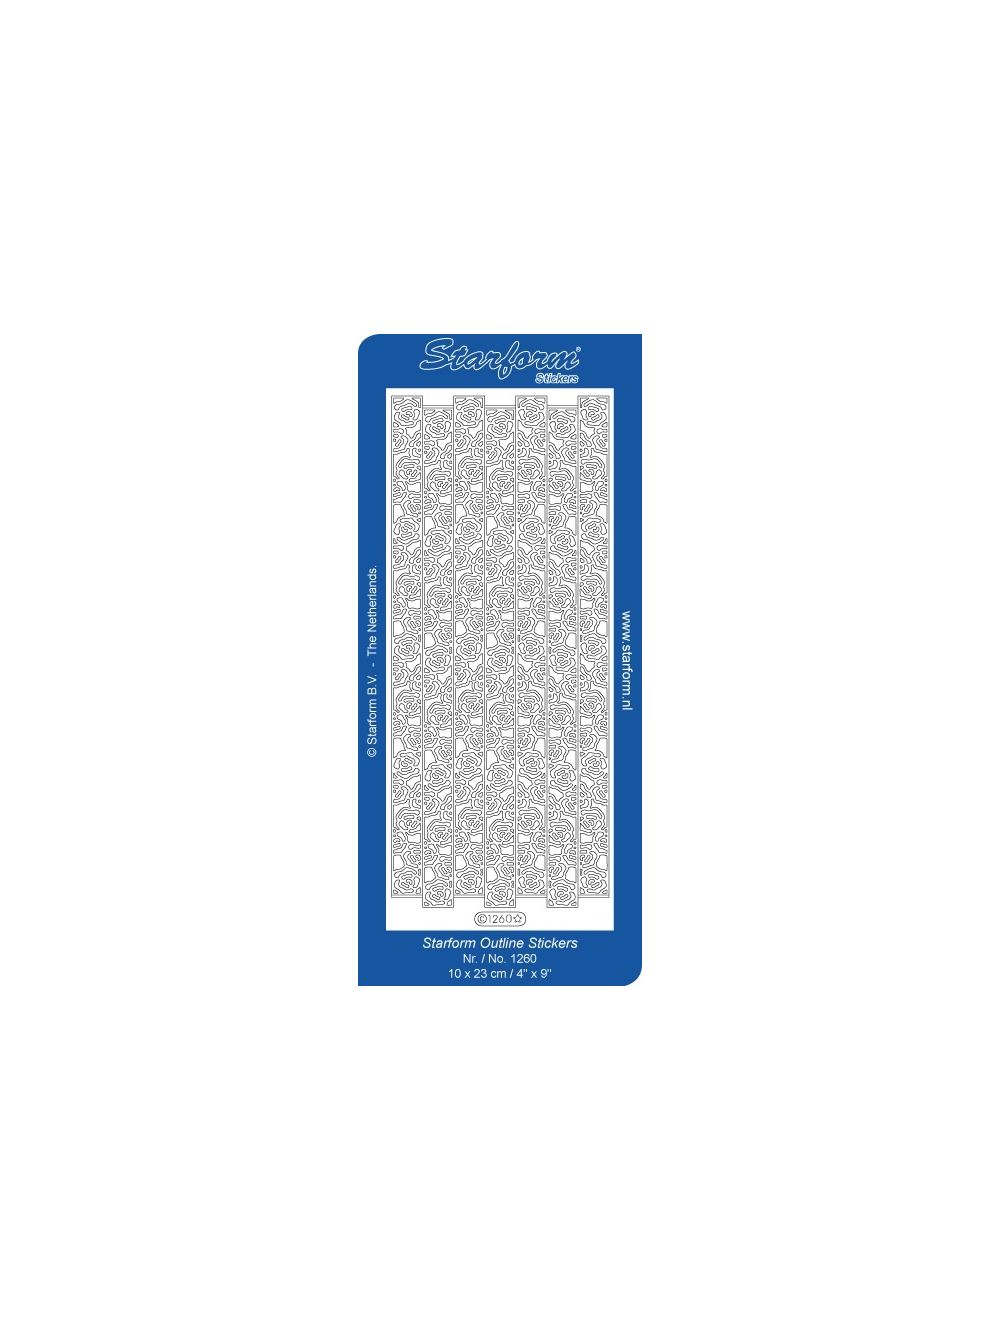 Konturensticker Sticker, Bordüre Rosen, 10x23cm, 1 Bogen